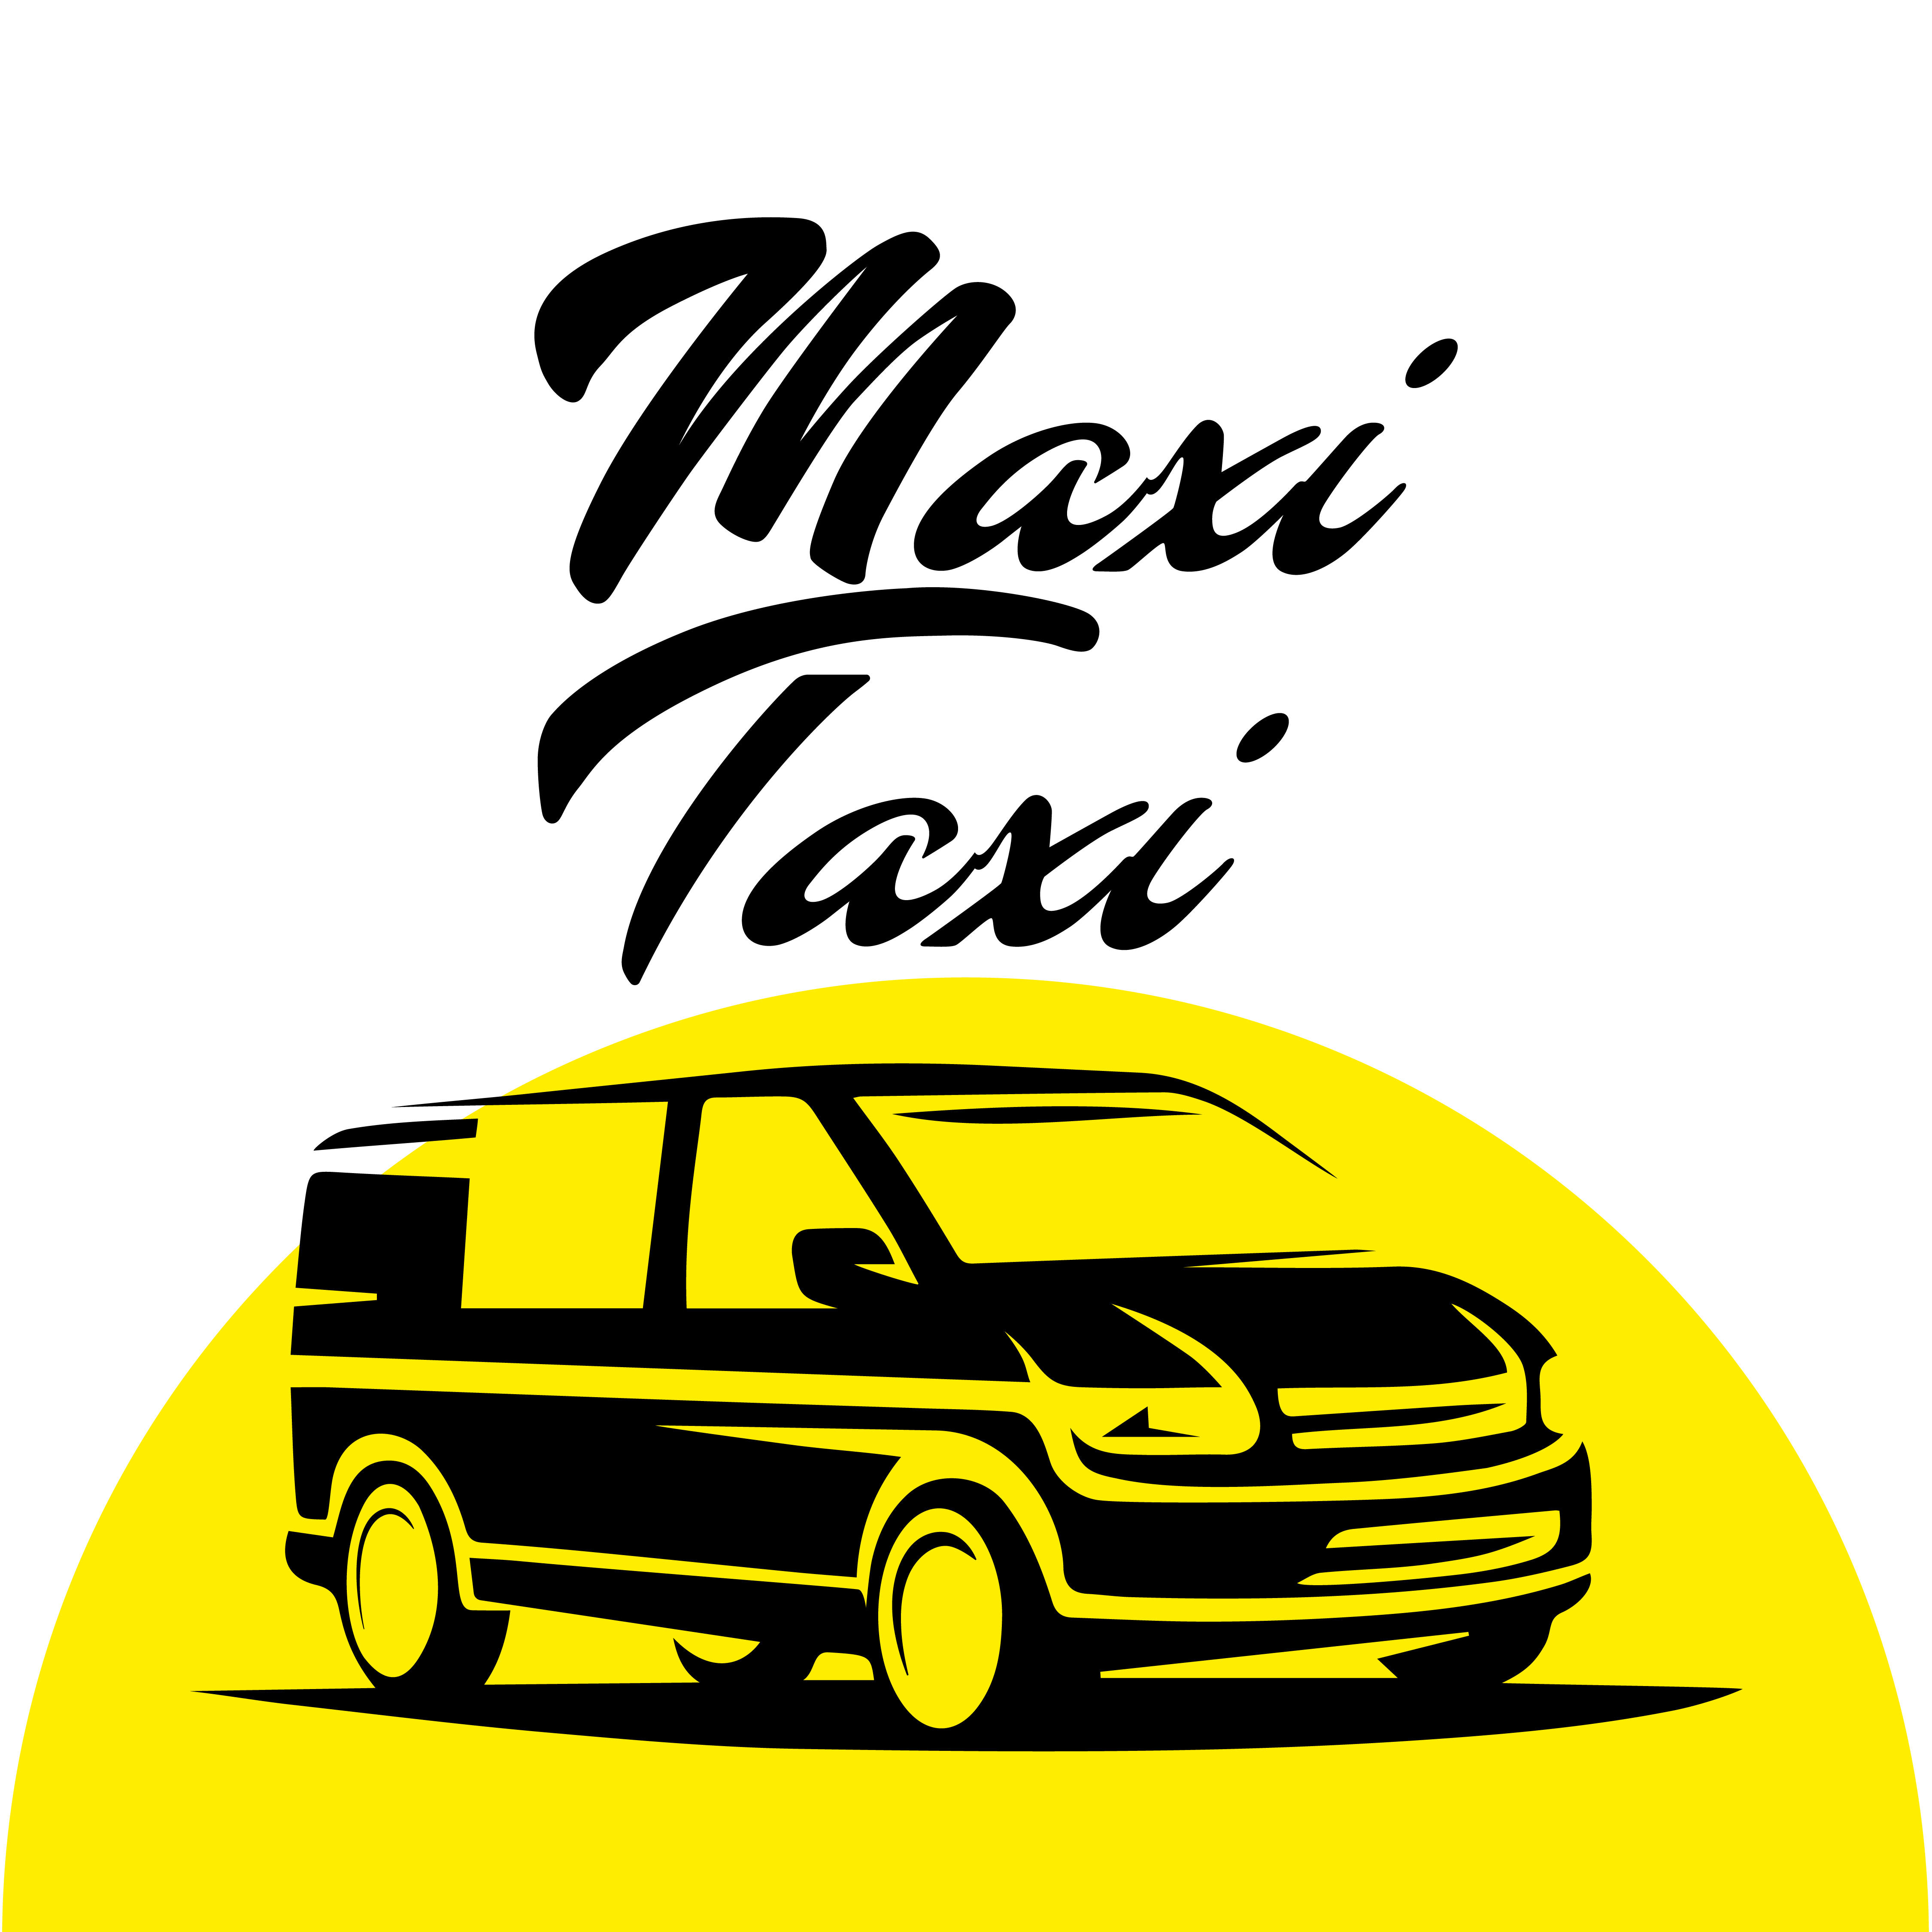 Такси транзит. Такси микроавтобус. Минивэн такси. Минивэн такси логотип. Такси вэн.